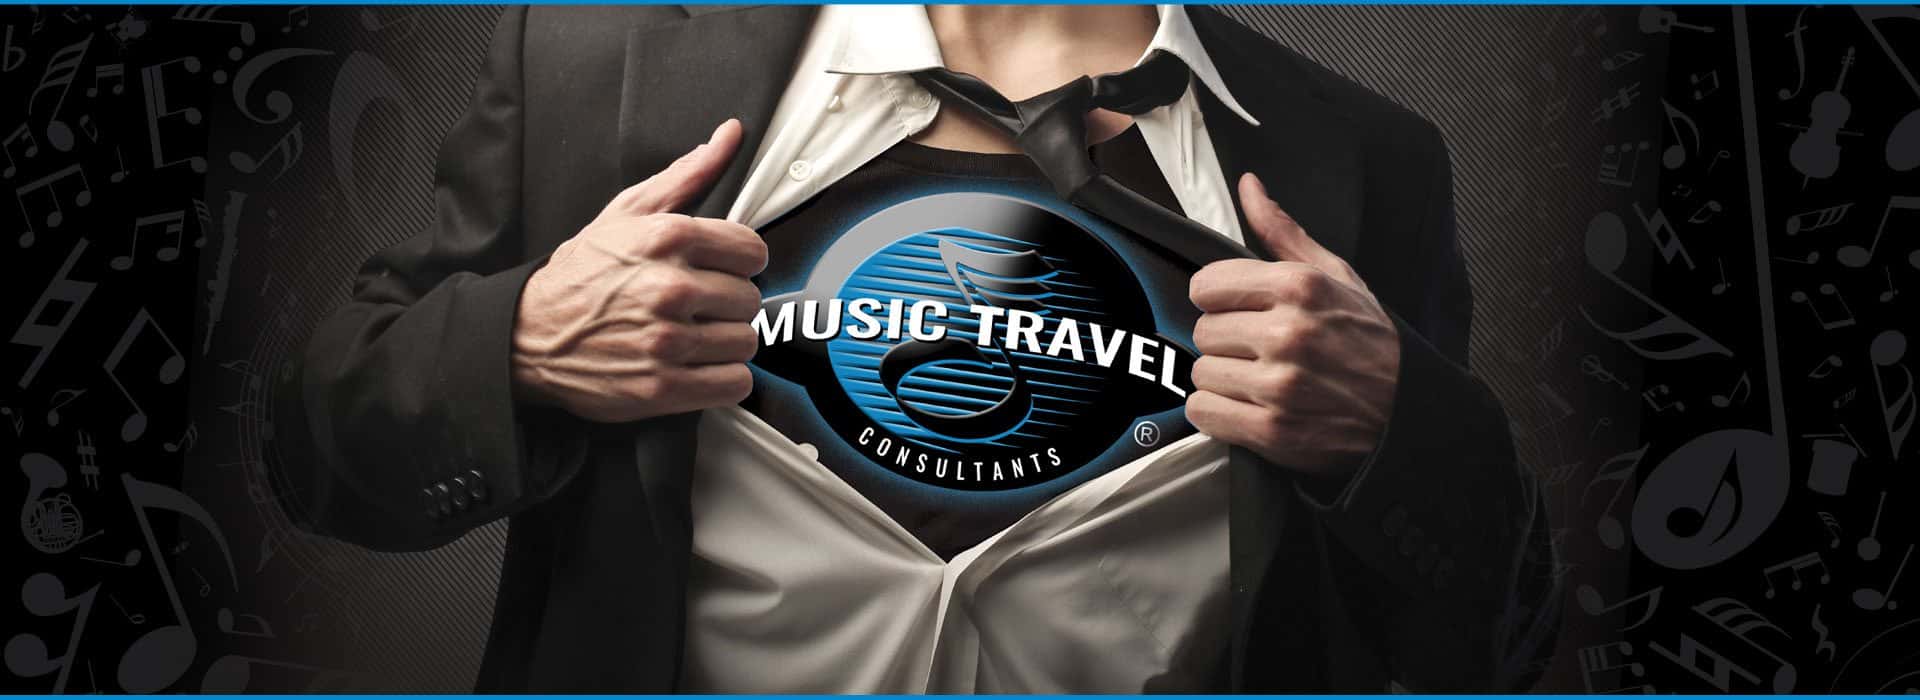 music travel consultants photos